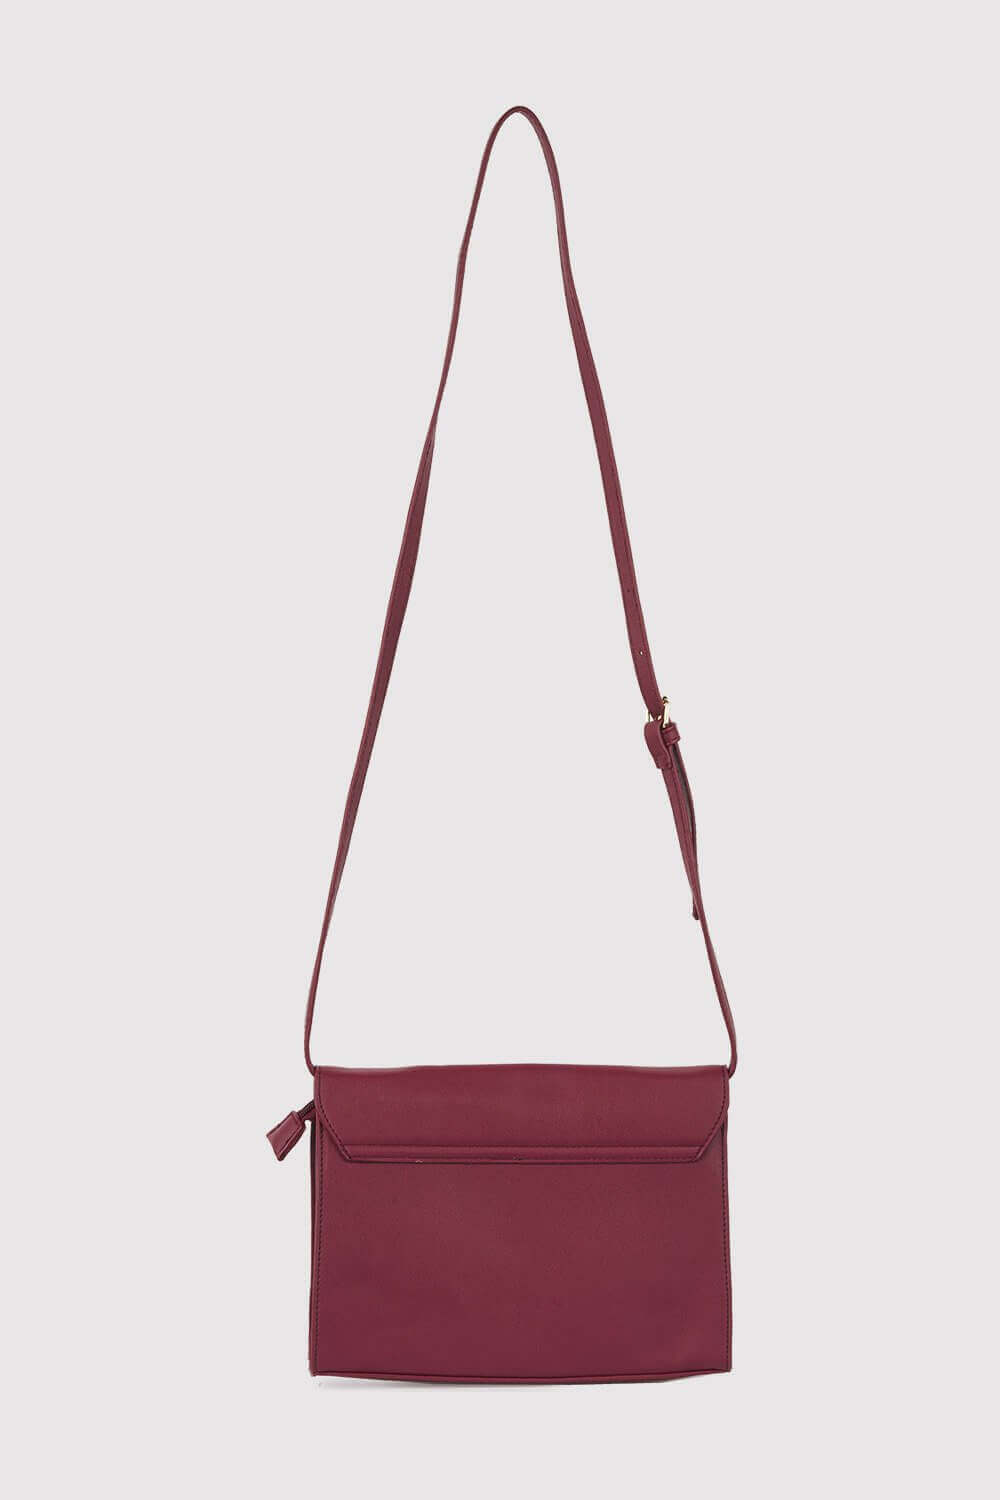 Avelino Faux Leather Cross Body Adjustable Strap Multi-Coloured Tassel Bag in Burgundy